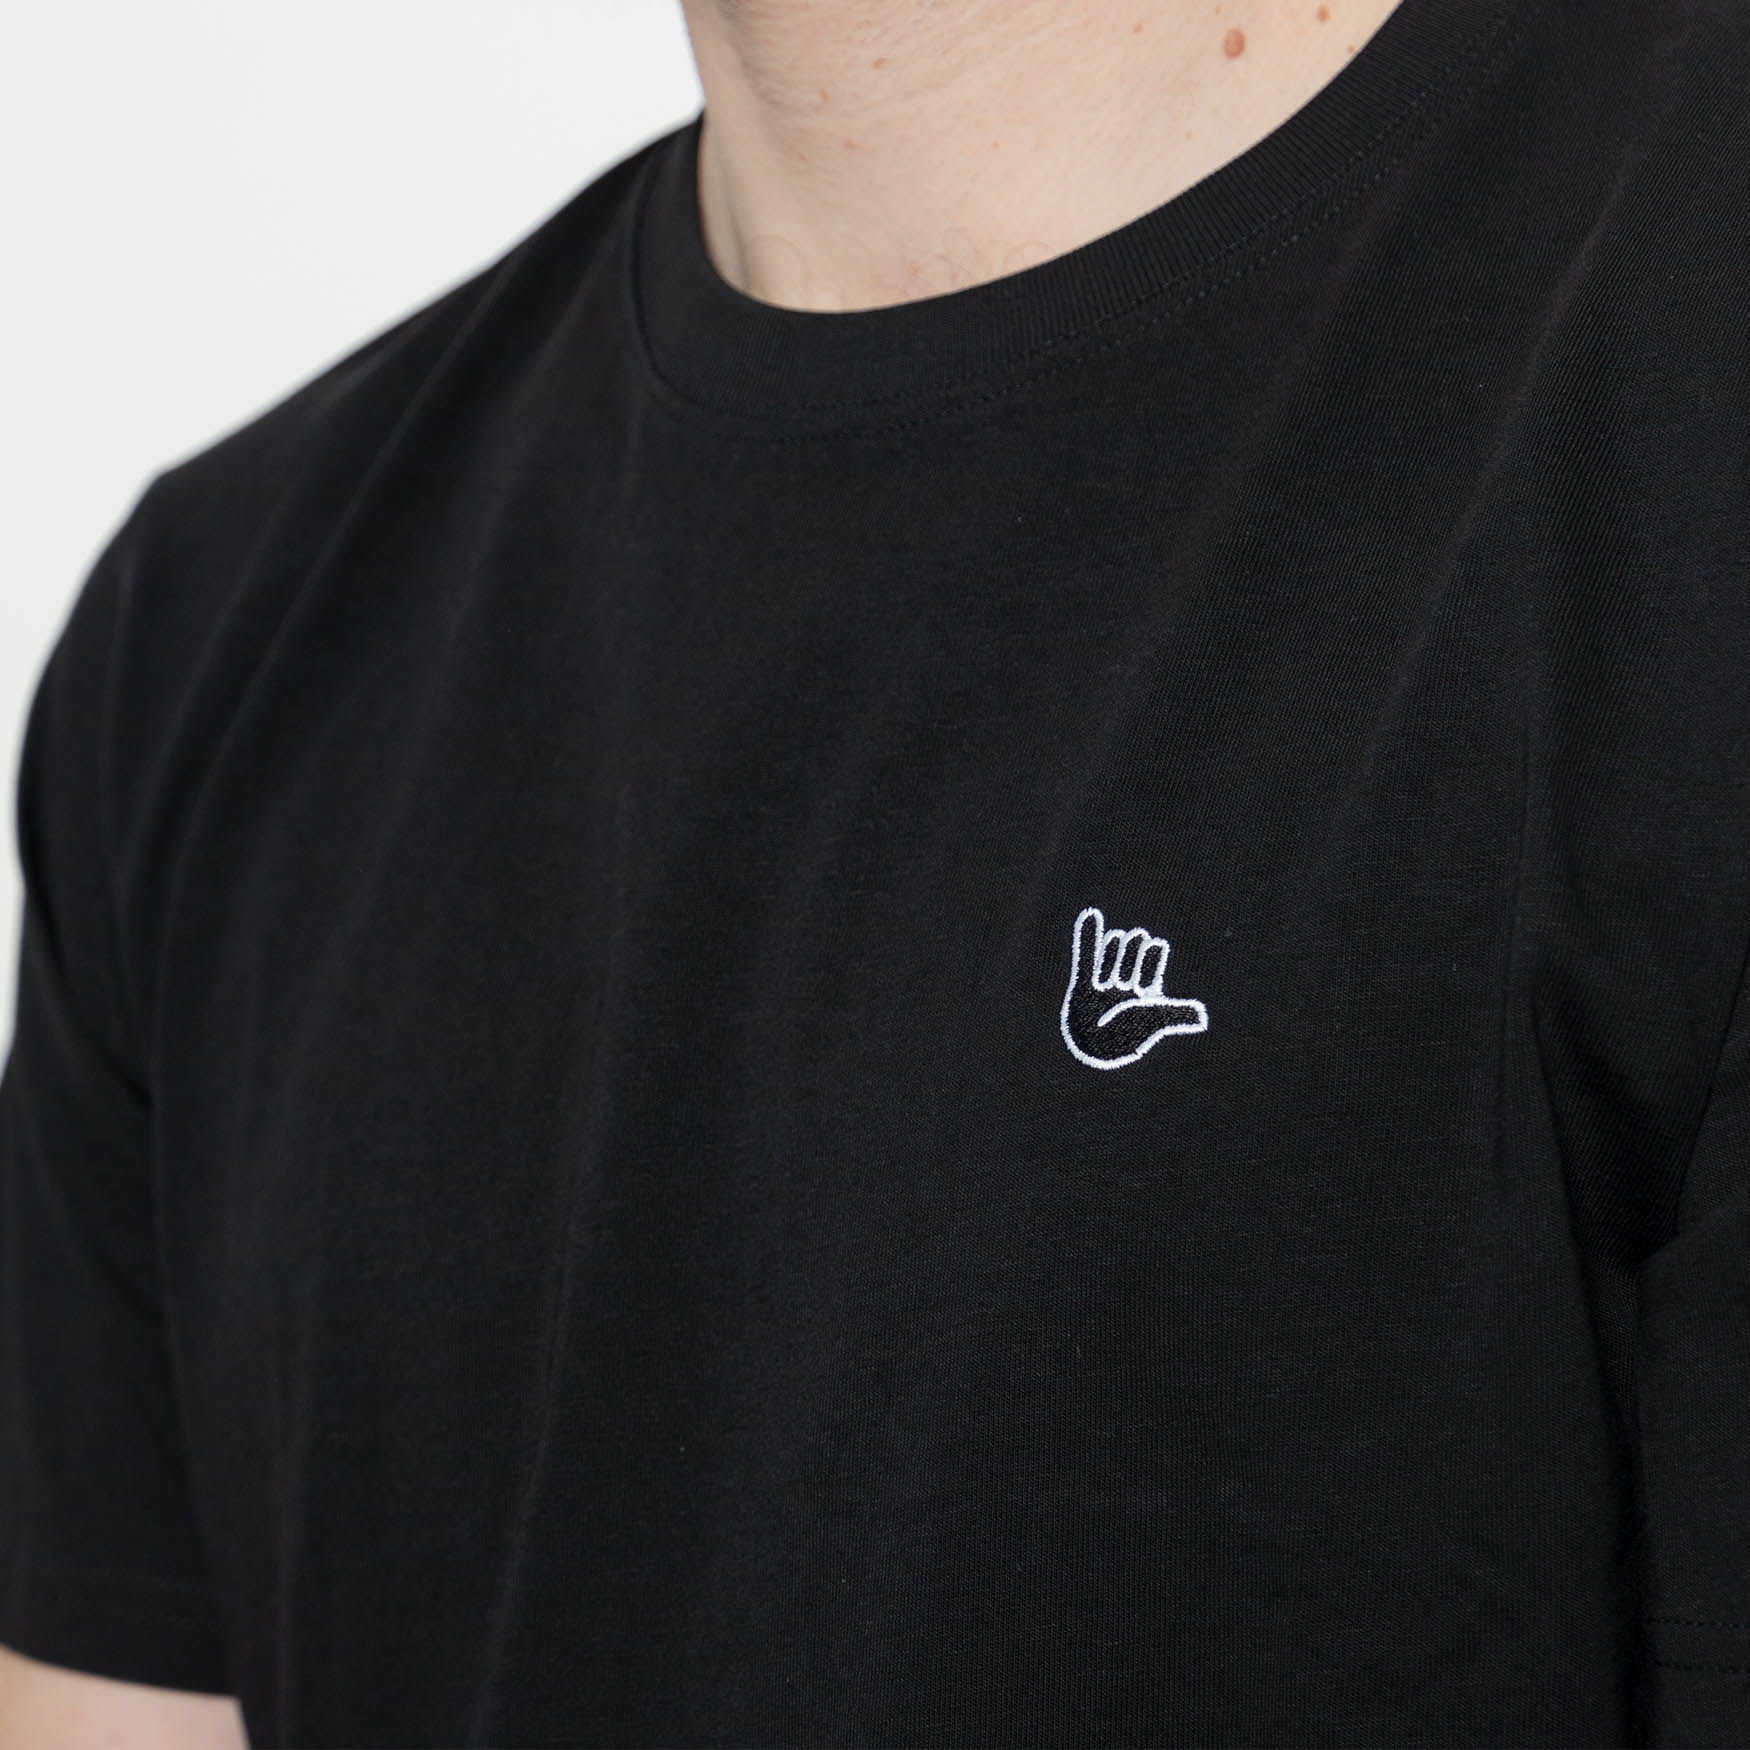 Hang Loose – T-Shirt schwarz